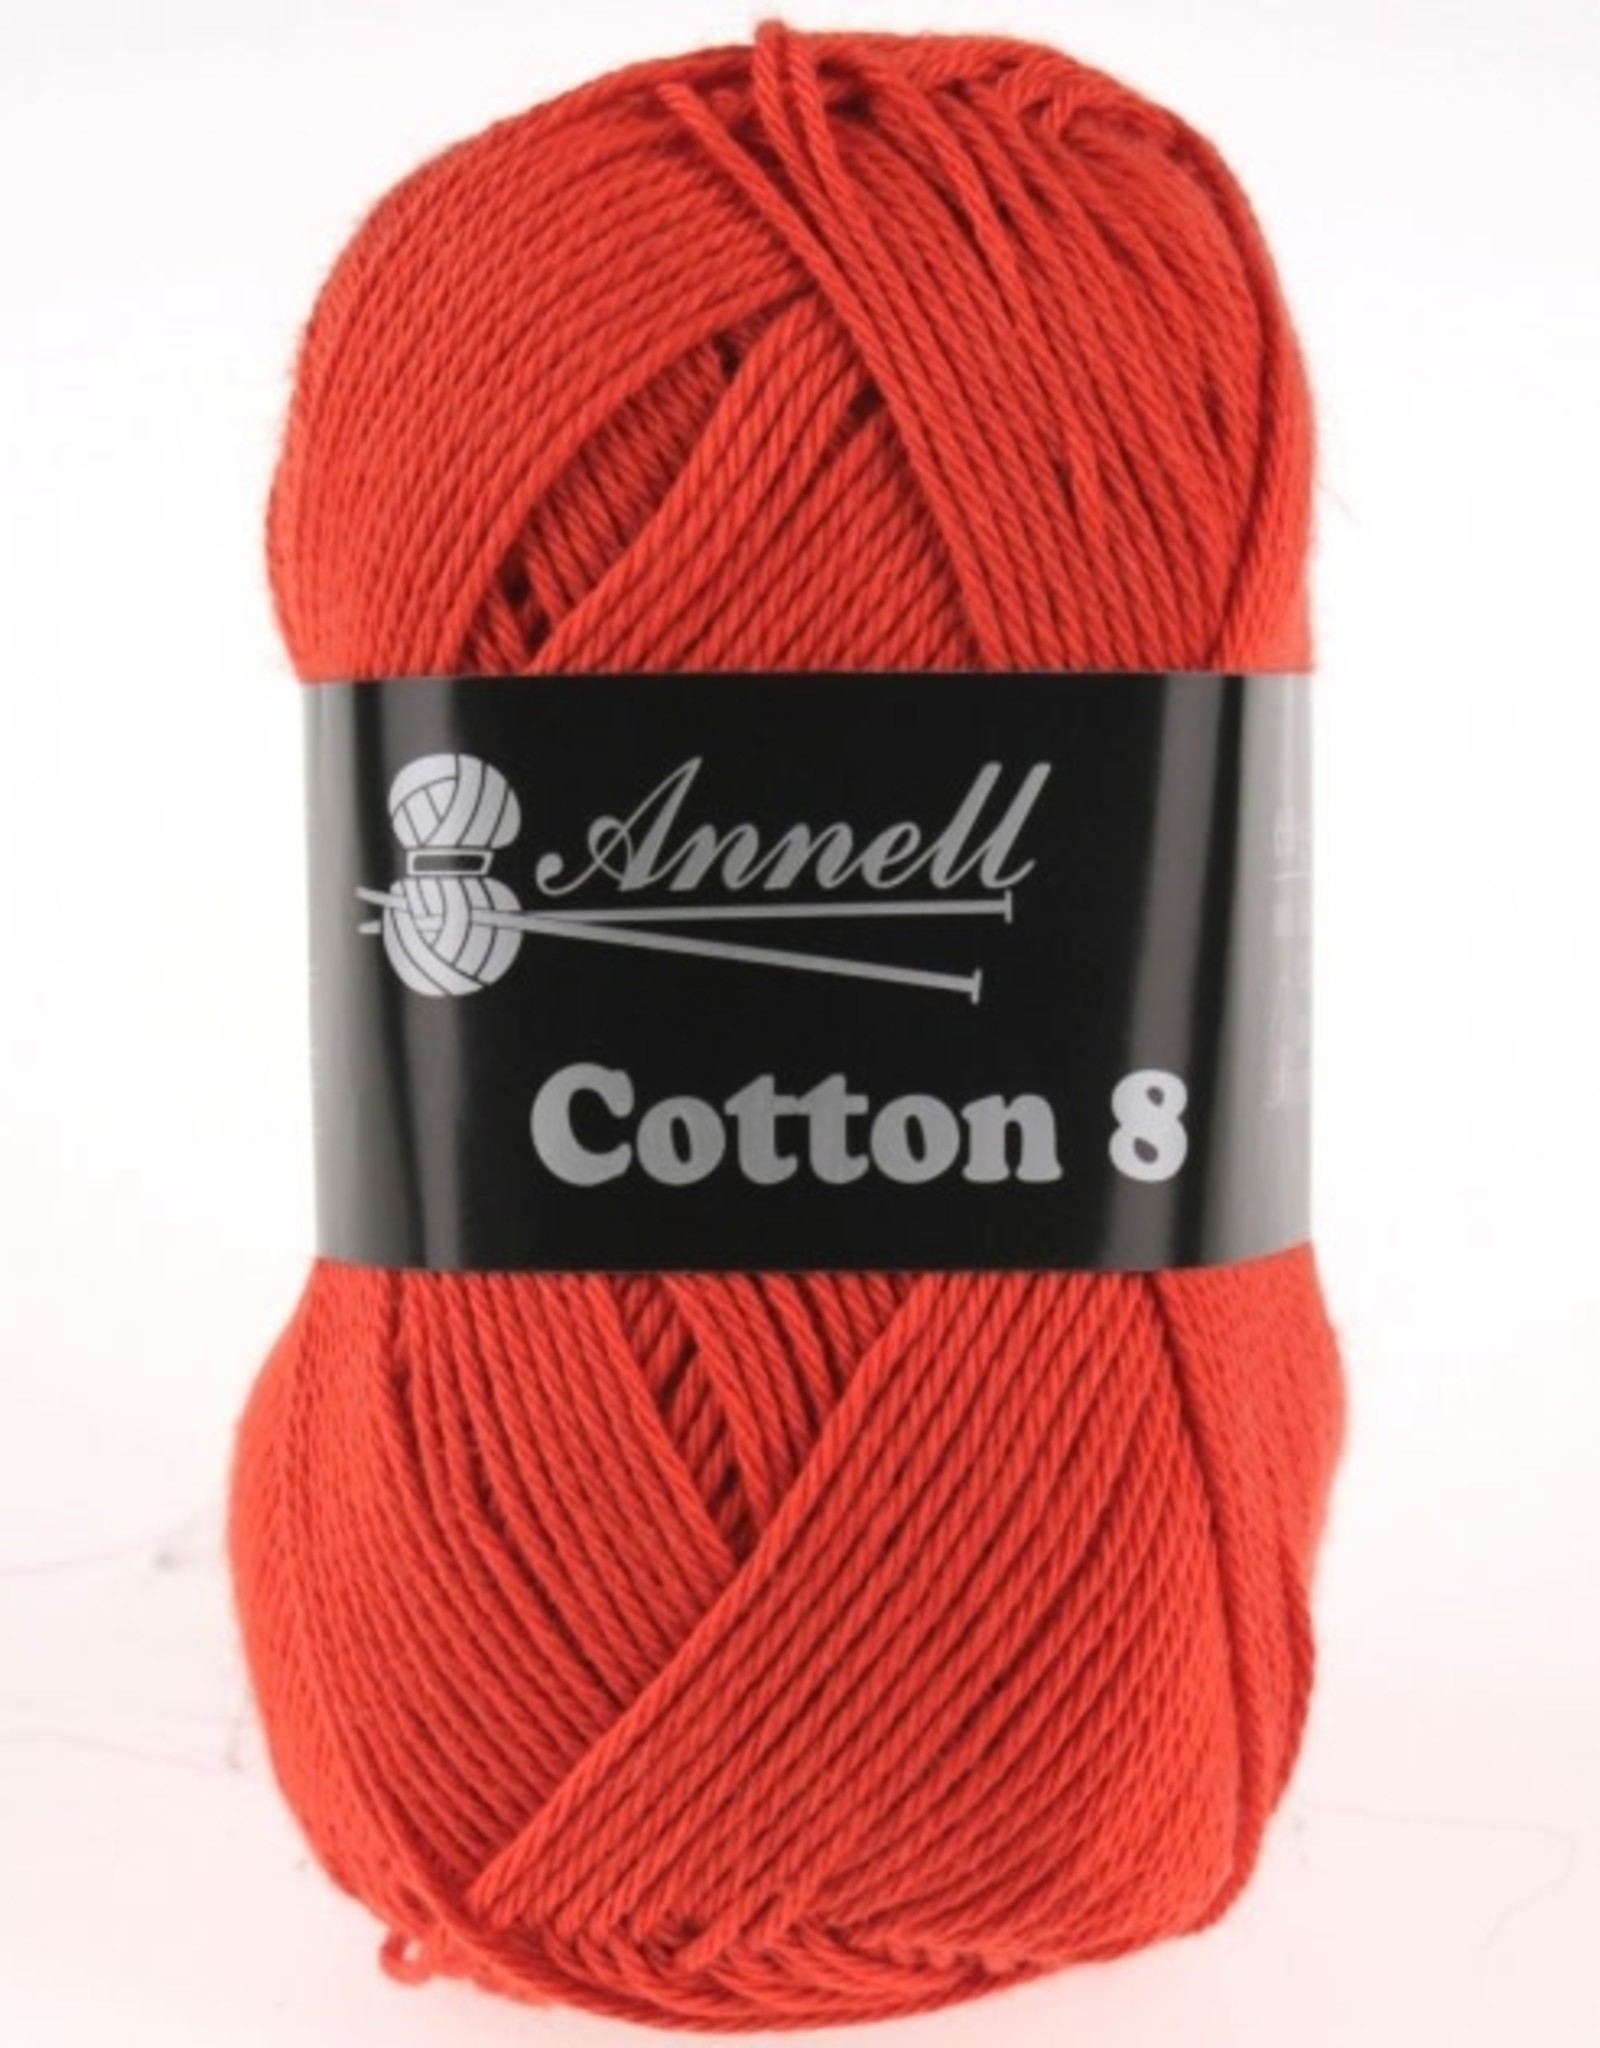 Annell Annell Cotton 8 4